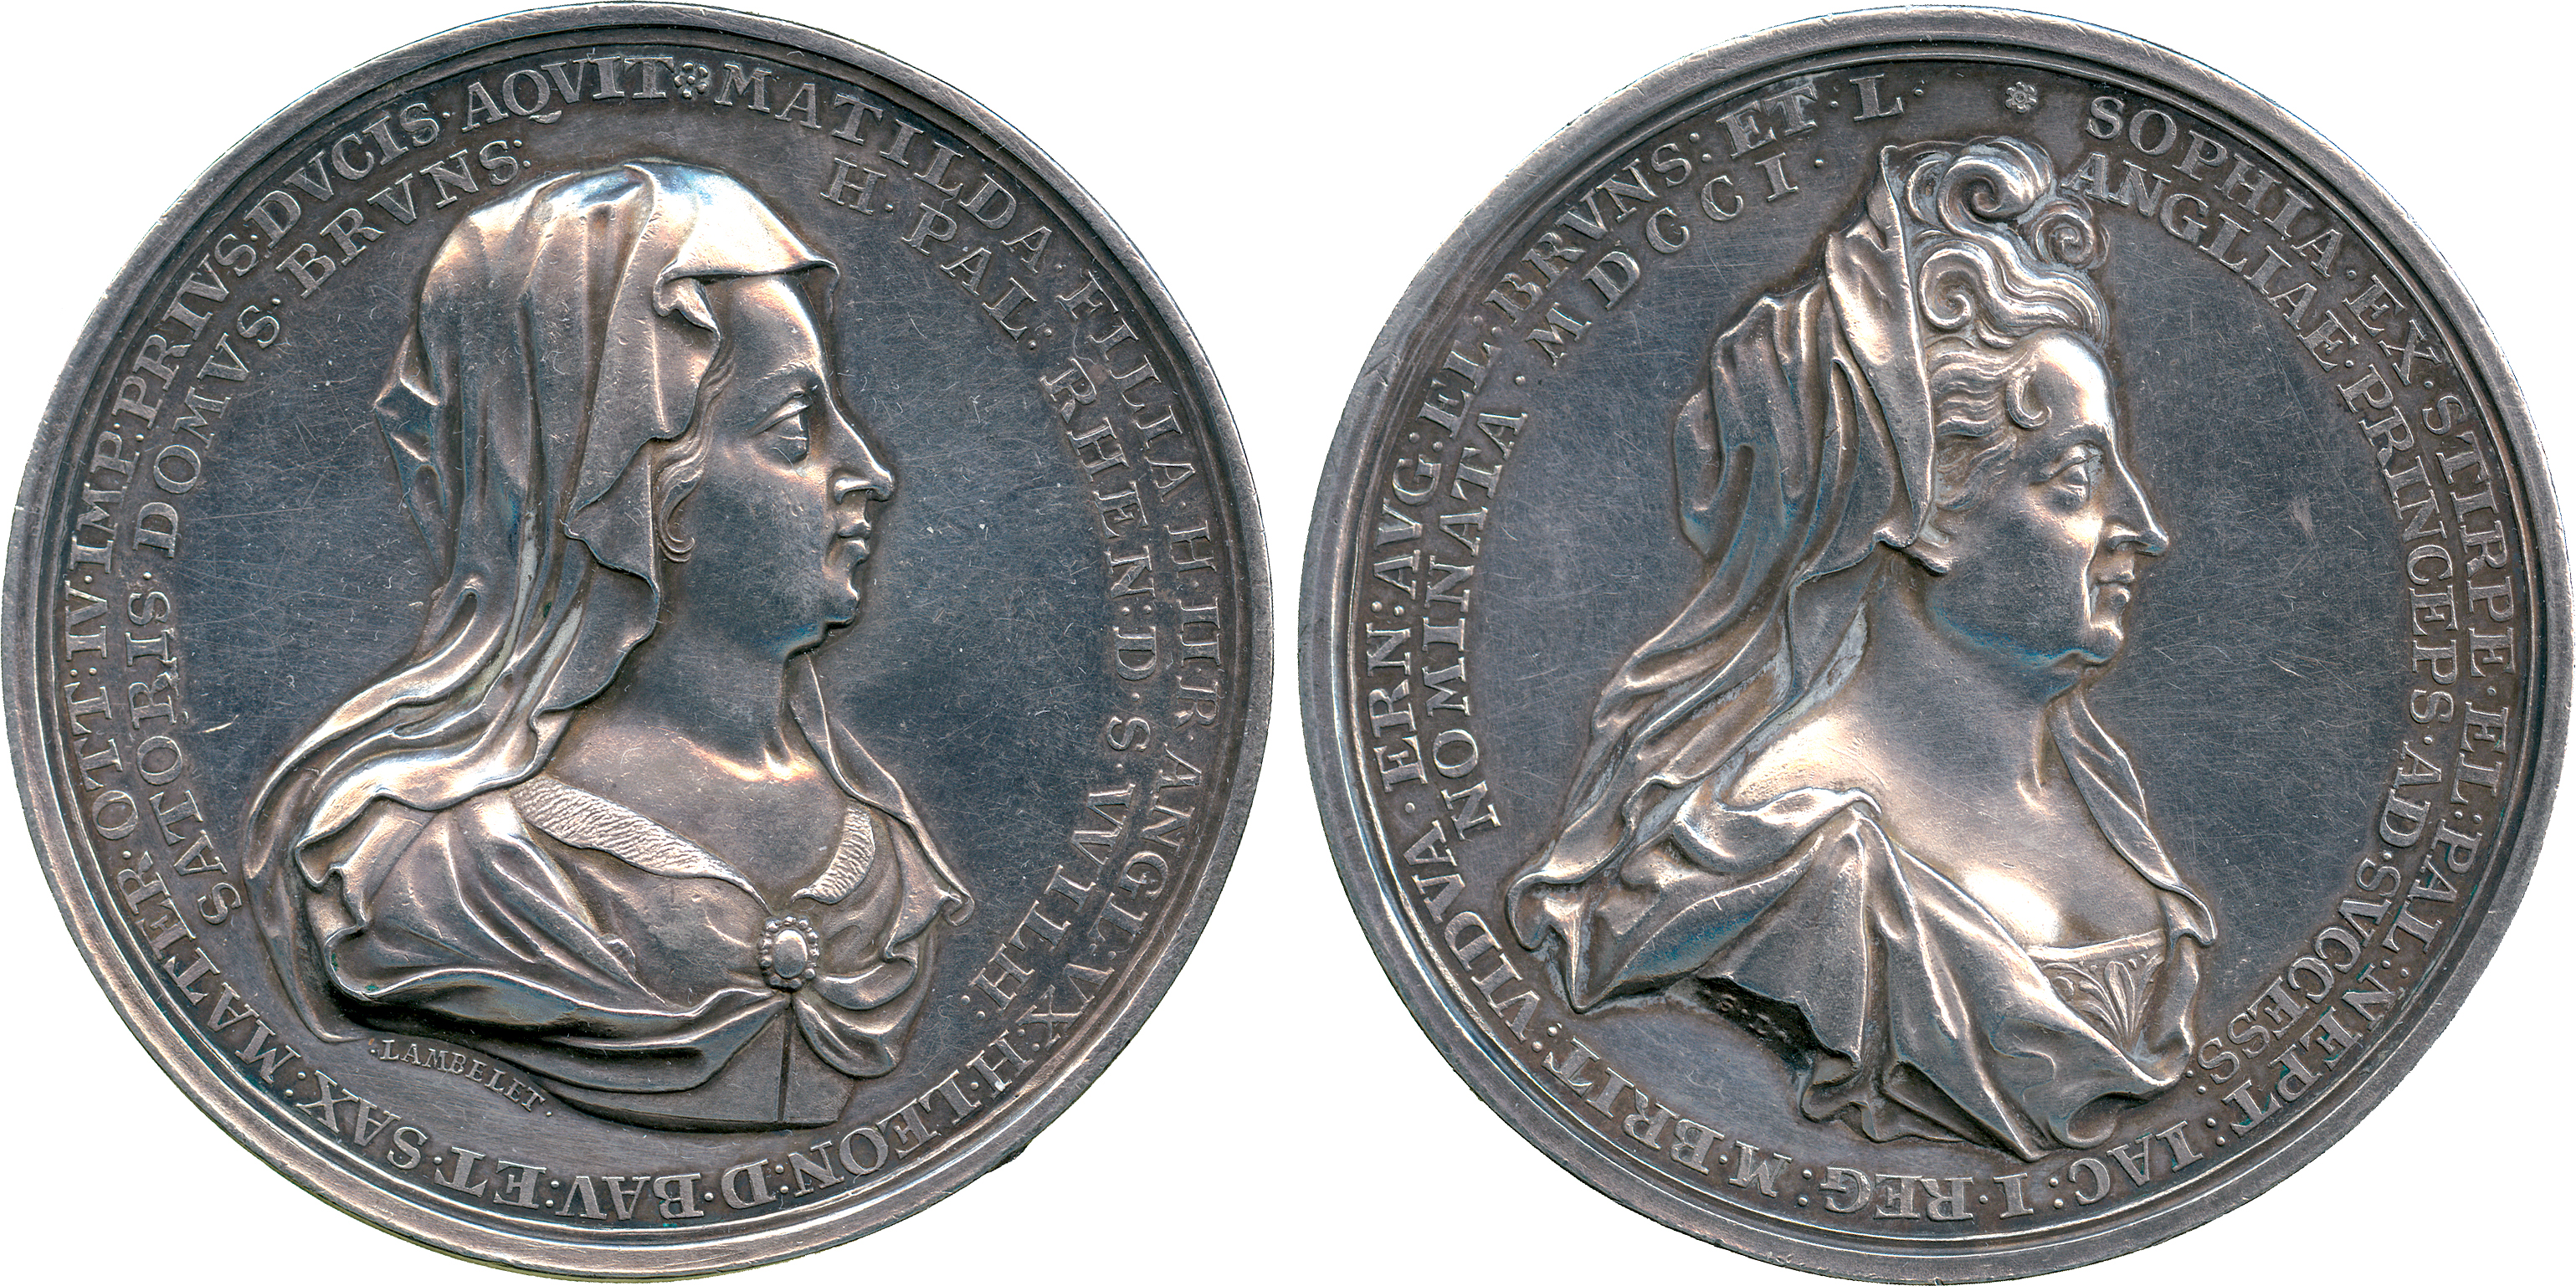 COMMEMORATIVE MEDALS, BRITISH MEDALS, Princess Matilda and the Electress Sophia, Silver Medal, 1701,